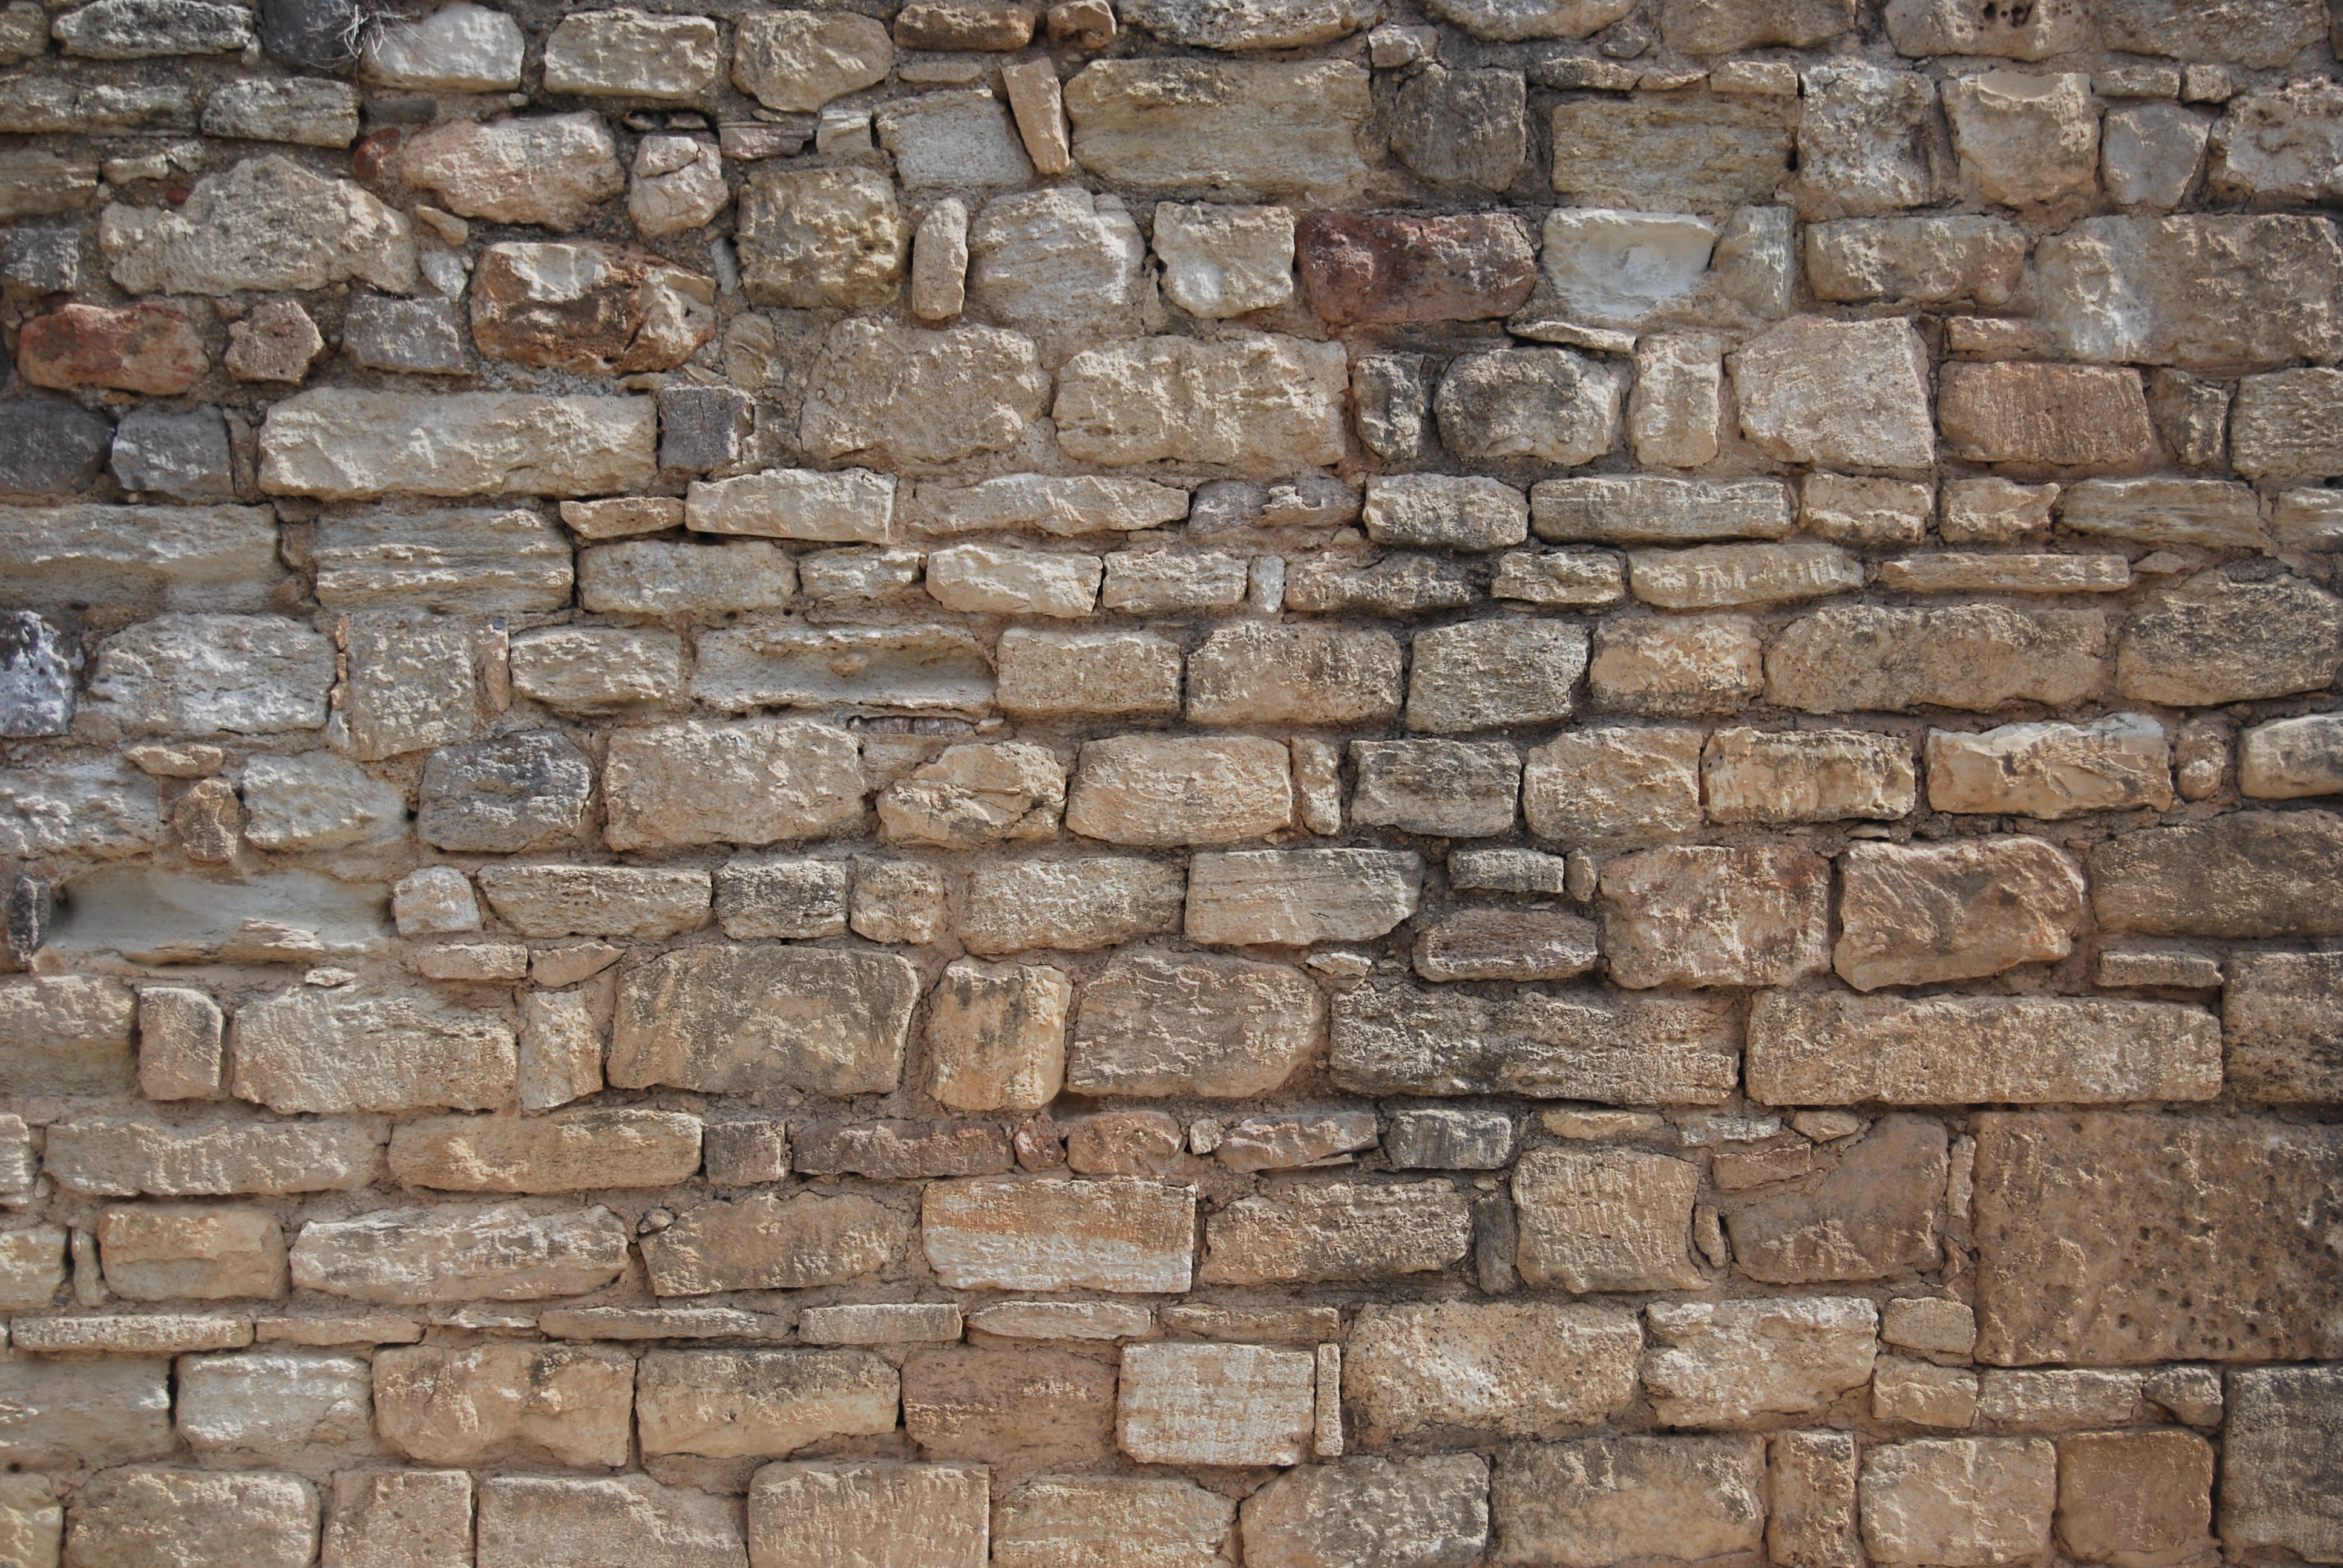 old stone castle texture - Google Search | Textures | Pinterest ...